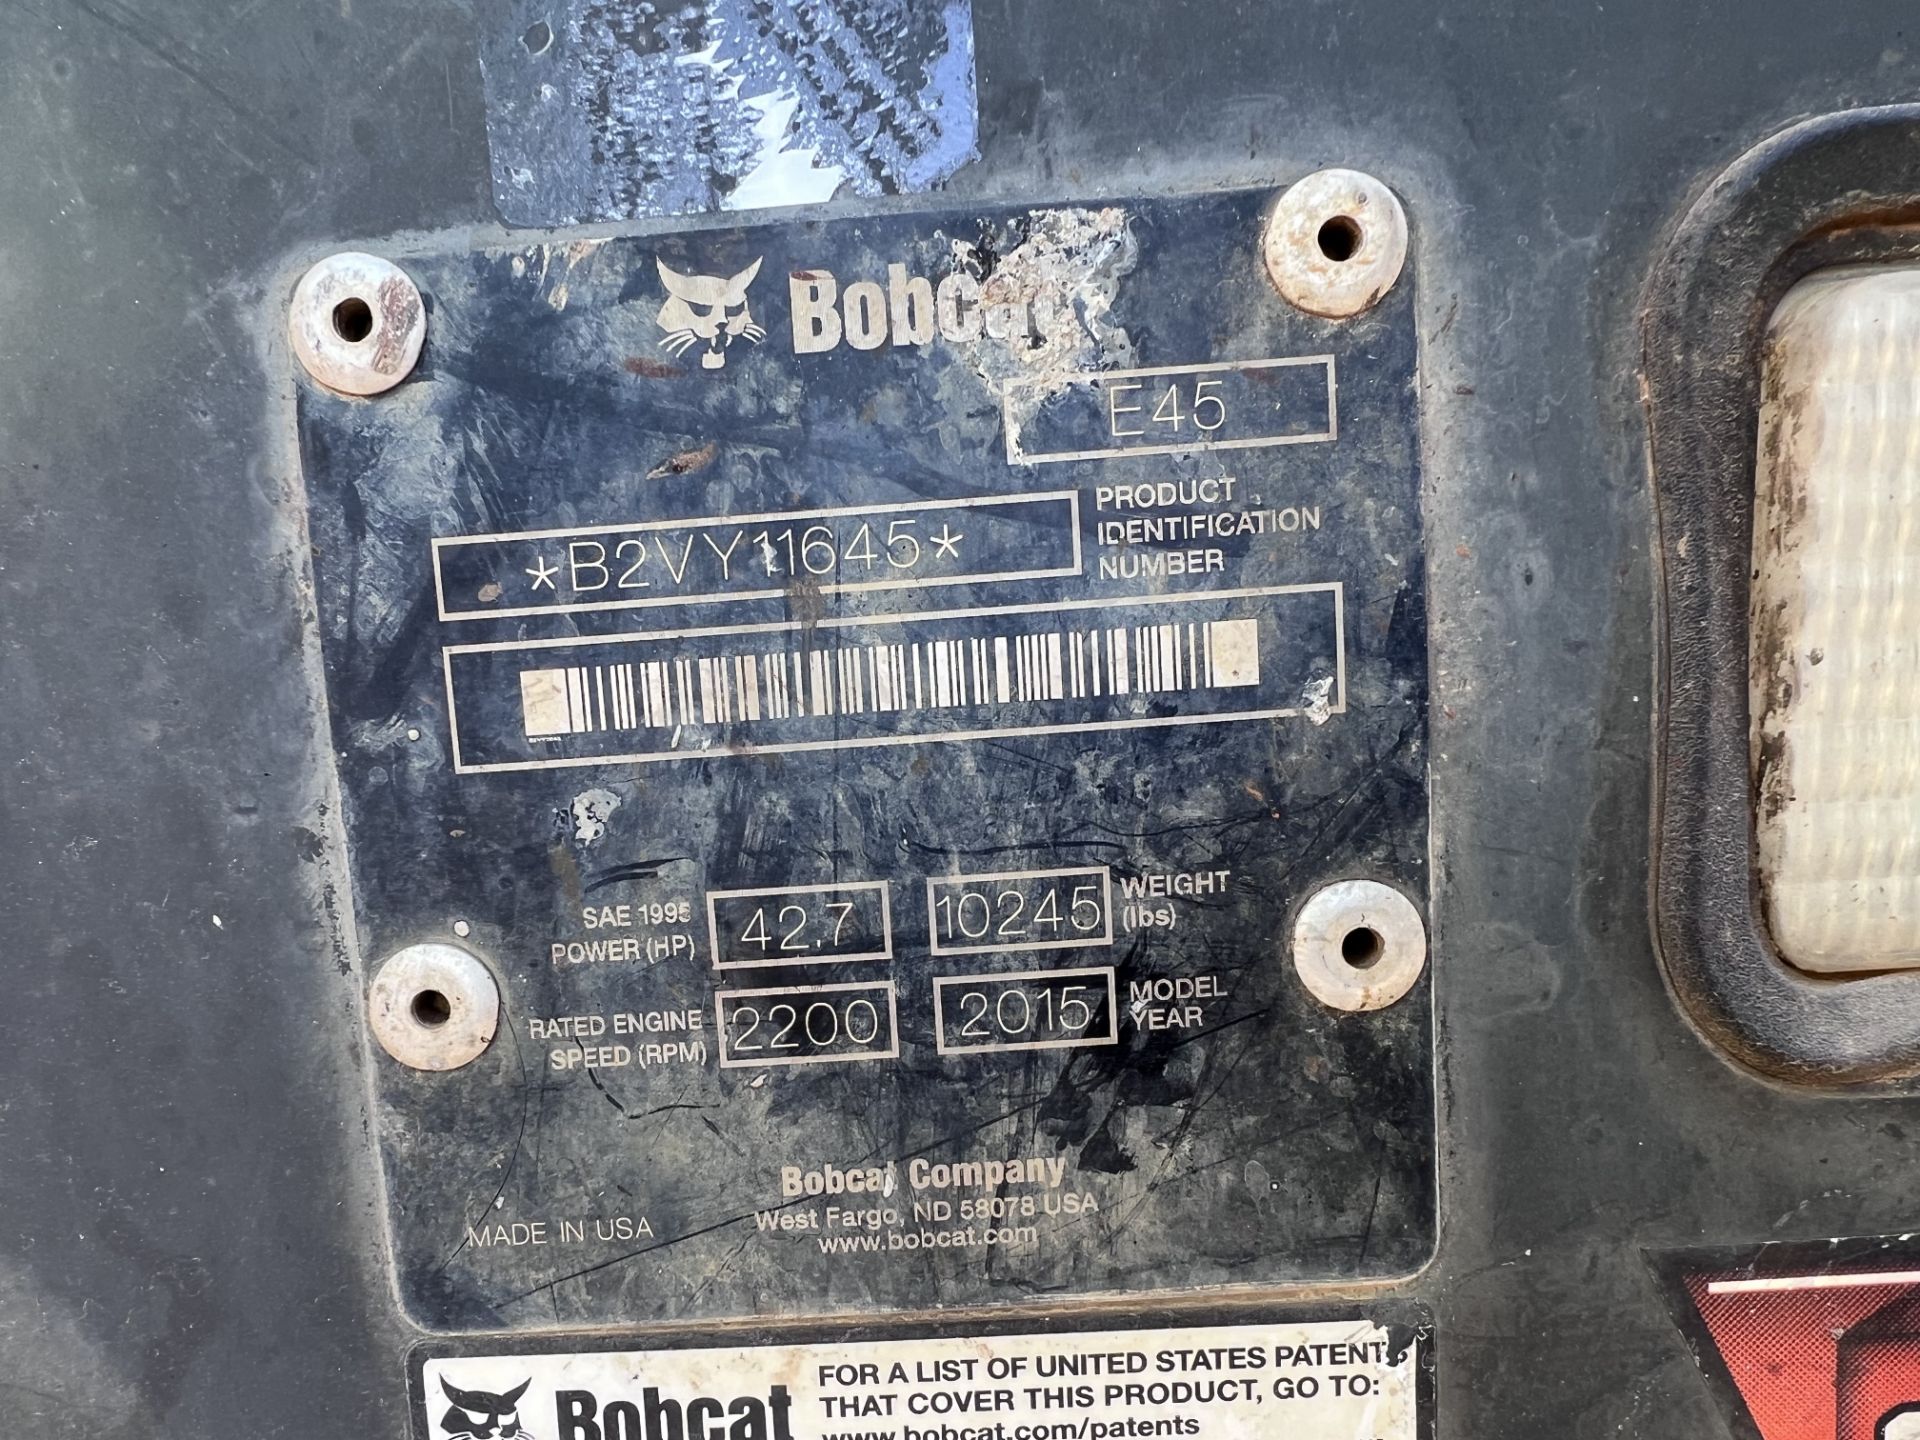 2015 Bobcat E45 Excavator - Image 7 of 8